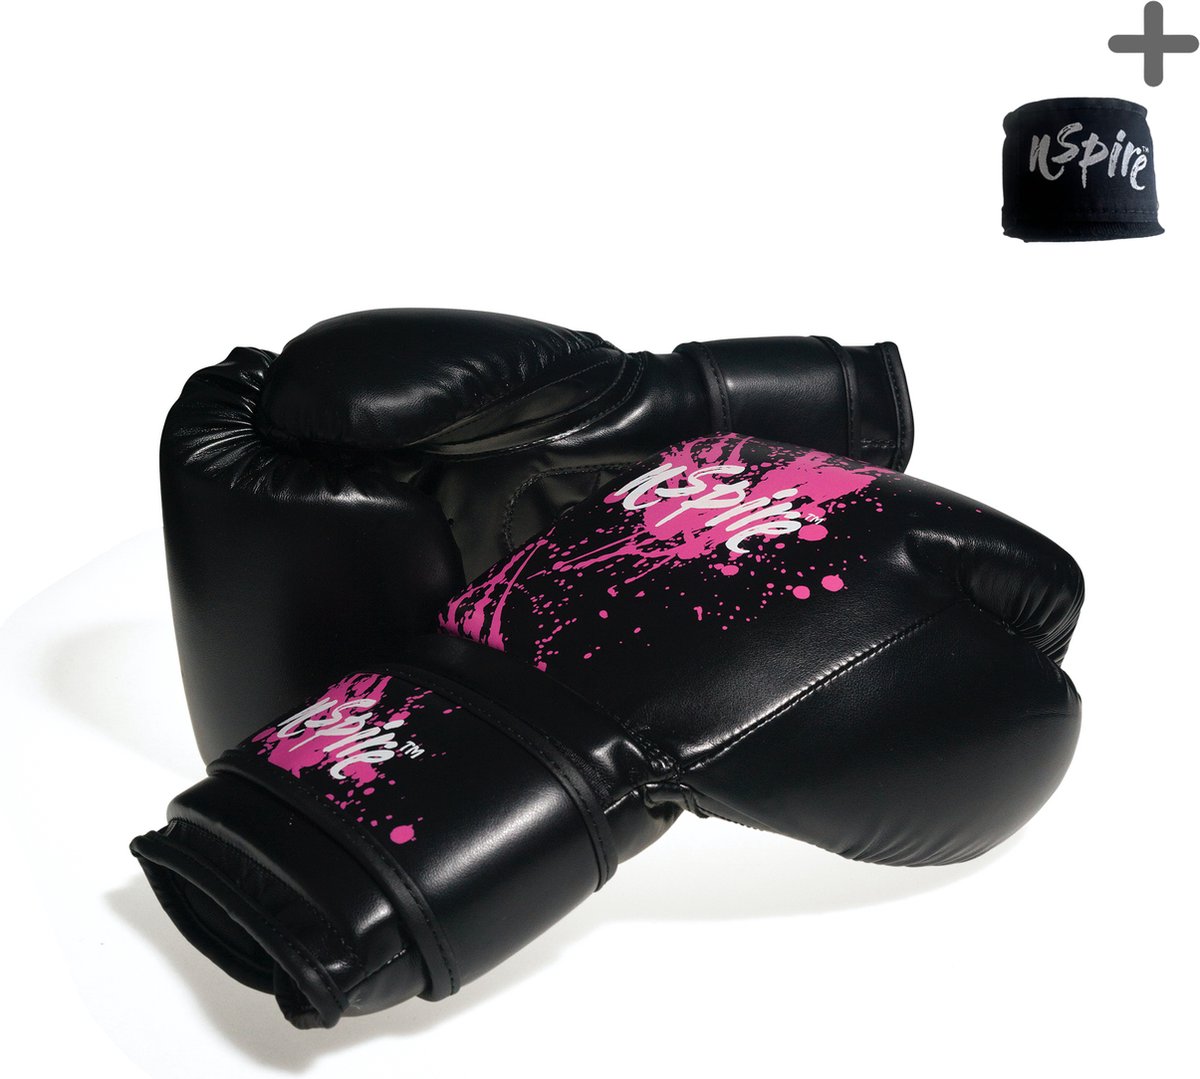 Nspire Sports : (kick) bokshandschoen - plus gratis bandage - Splash Zwart/Roze - 12 oz